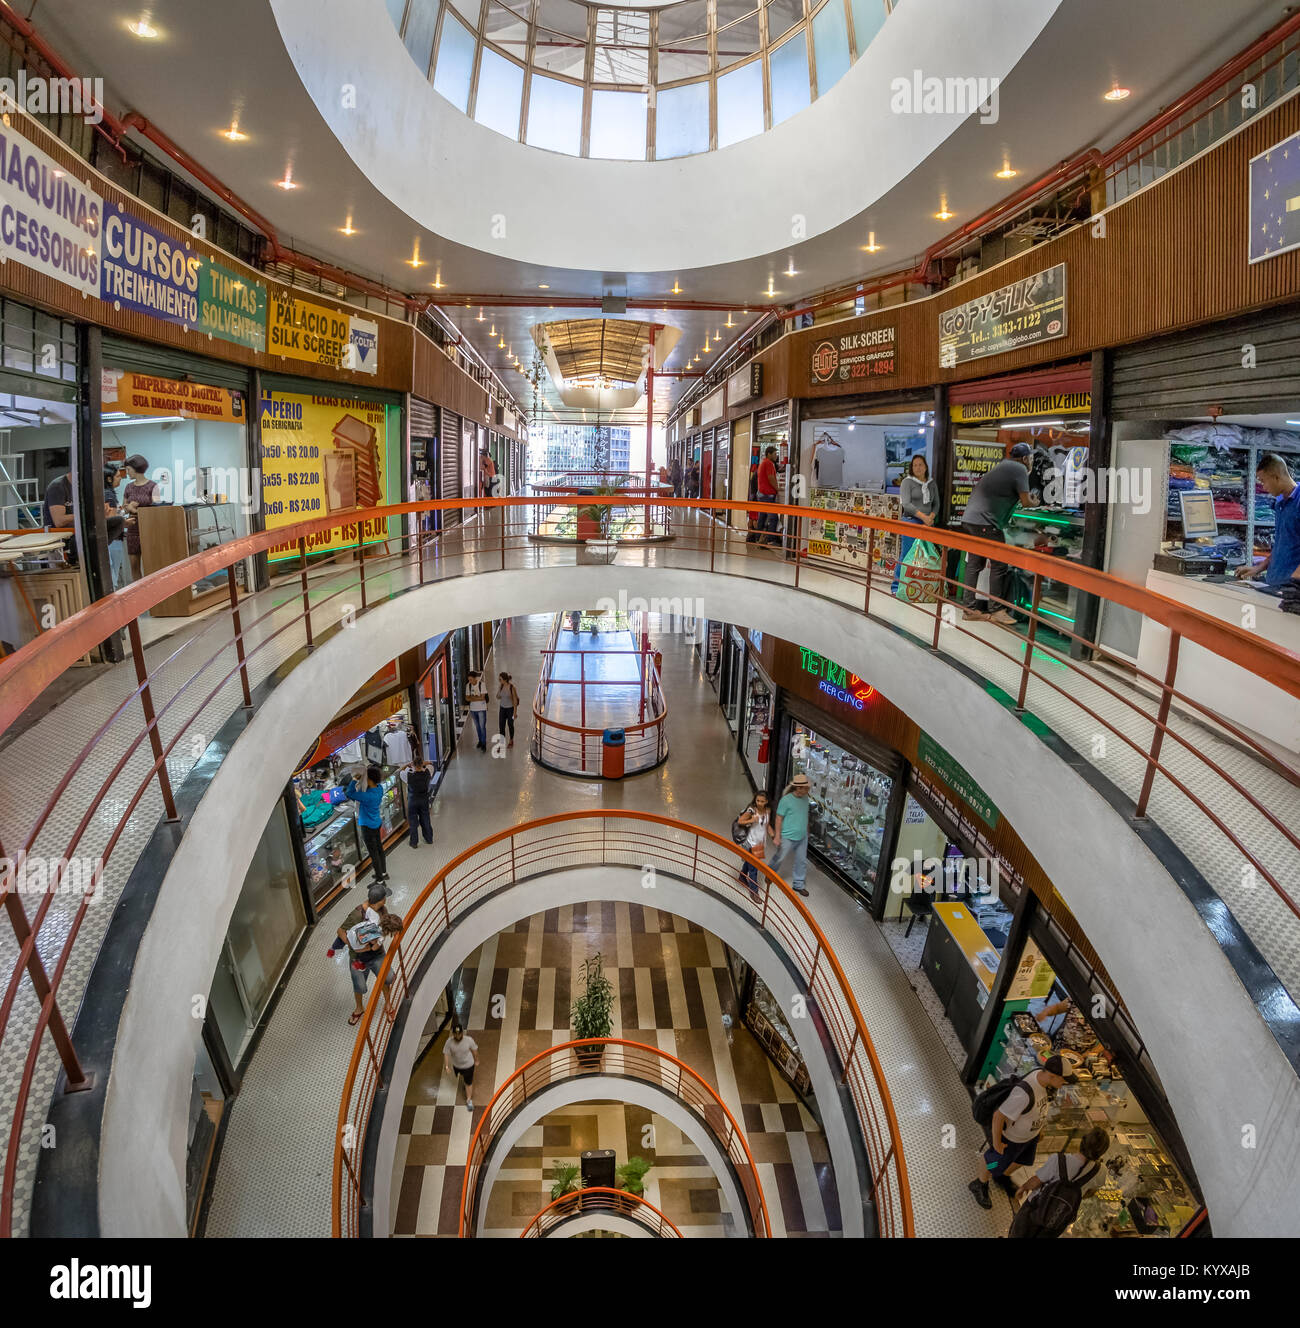 Galeria do Rock (Rock Gallery) Shopping Mall in Dowtown Sao Paulo - Sao Paulo, Brazil Stock Photo